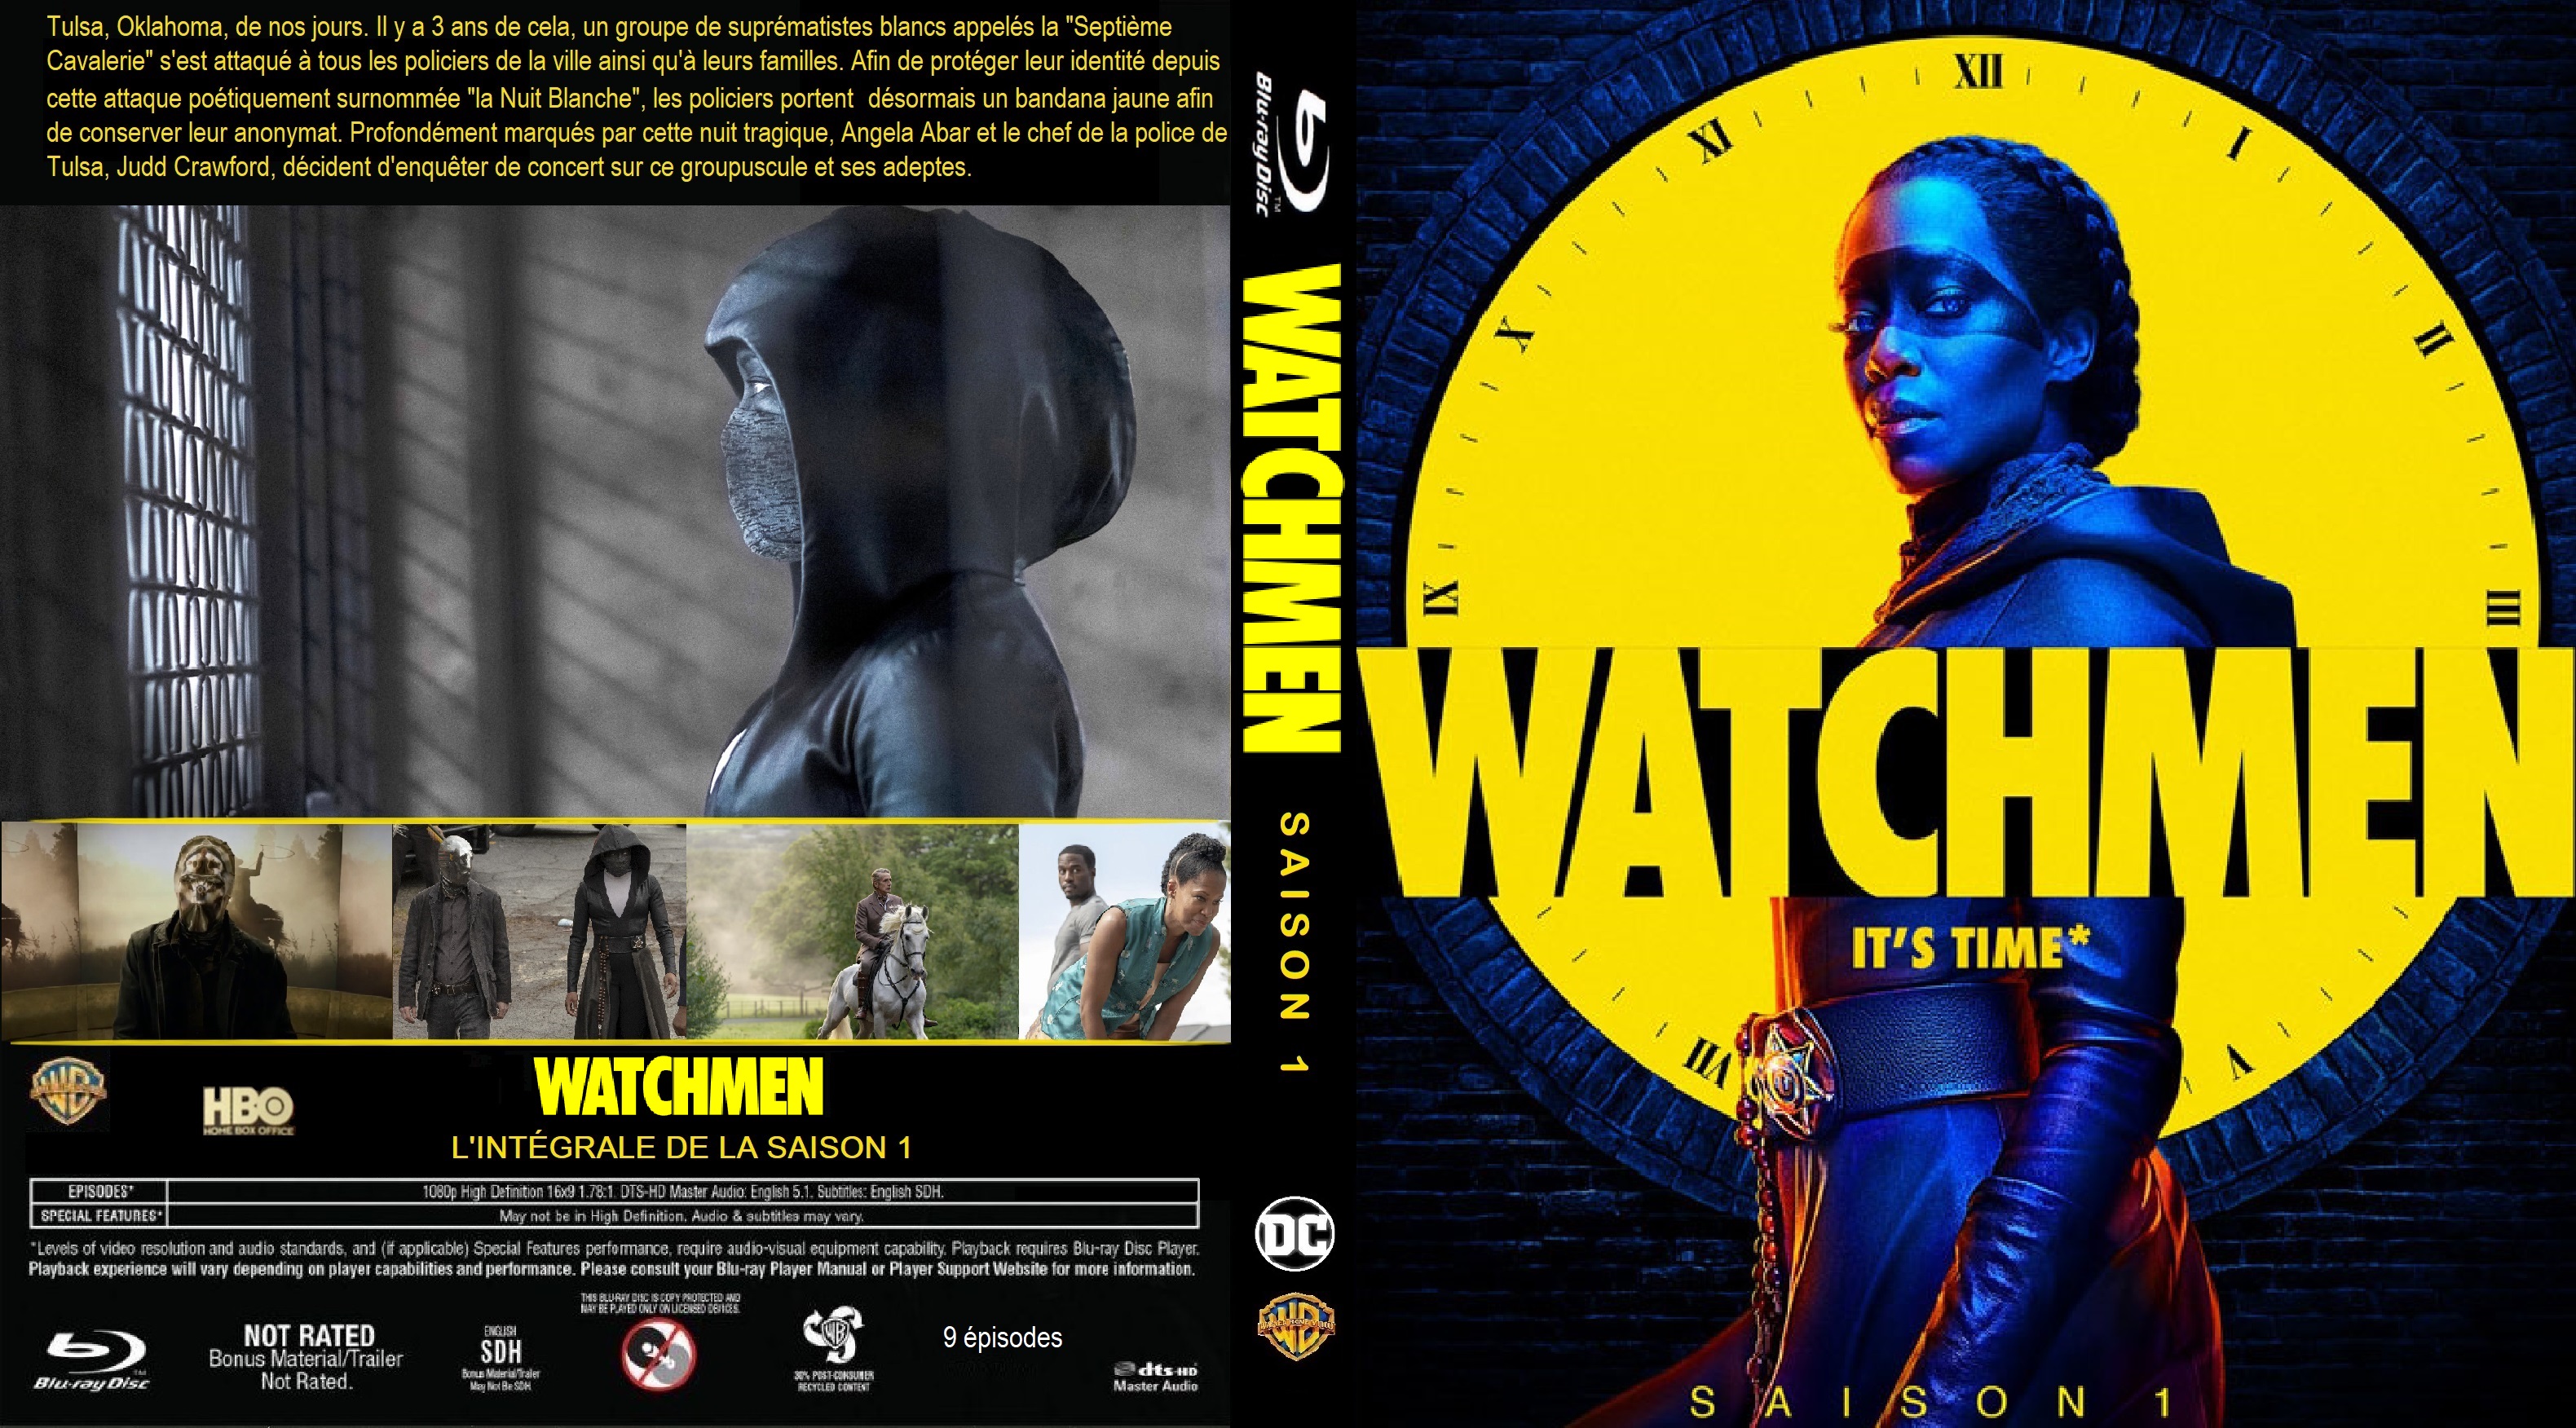 Jaquette DVD Watchmen saison 1 custom (BLU-RAY)